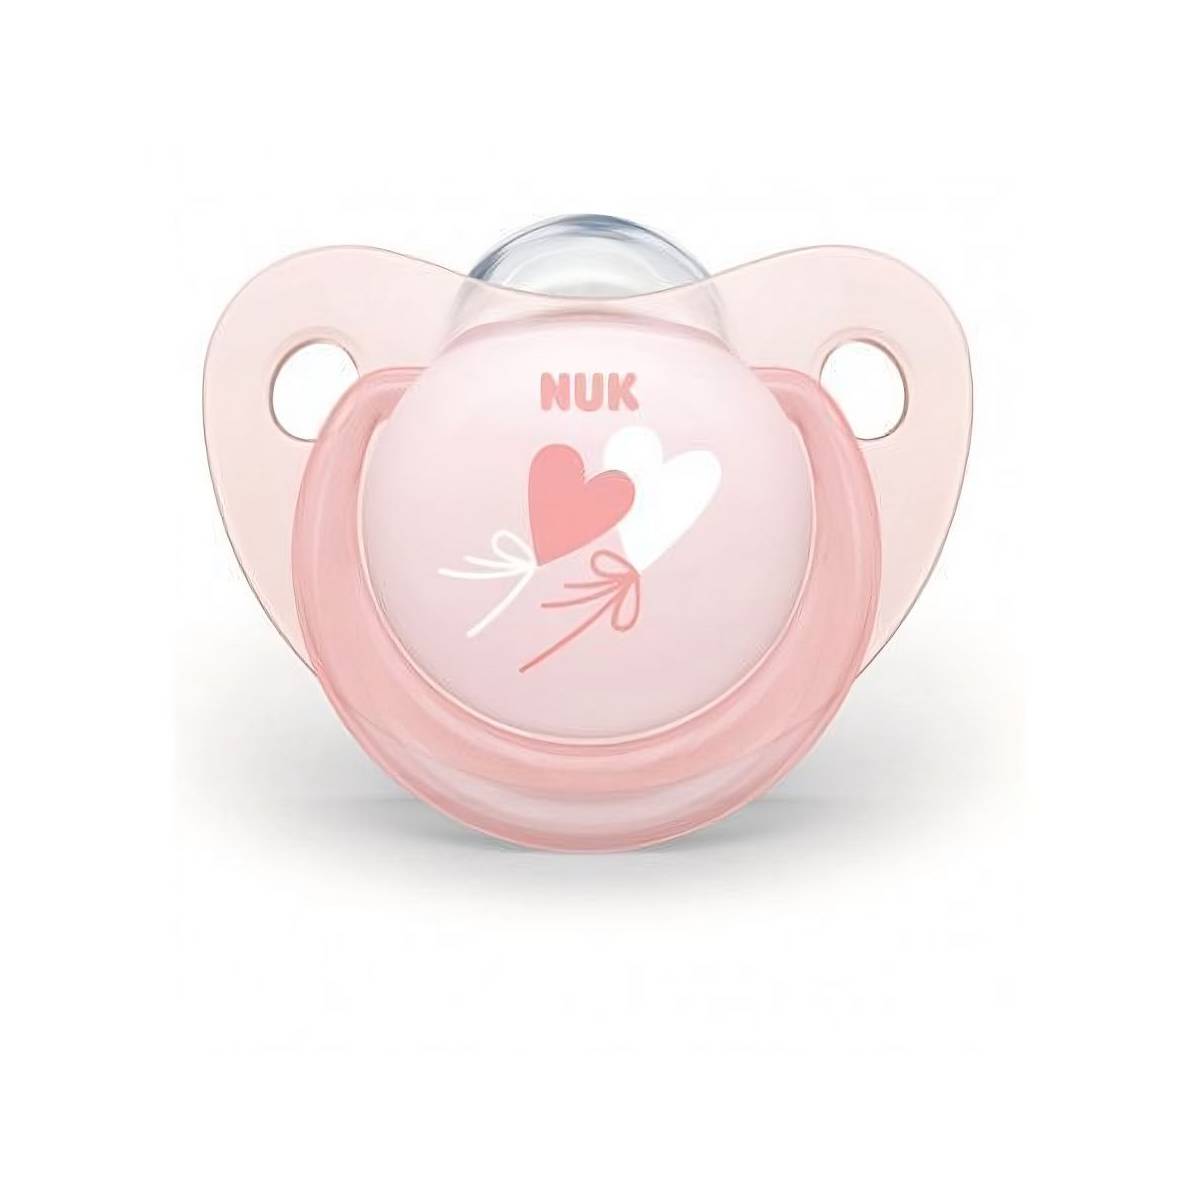 Sucettes Nuk Baby lapin et coeur rose 0-6 mois - MaxxiDiscount